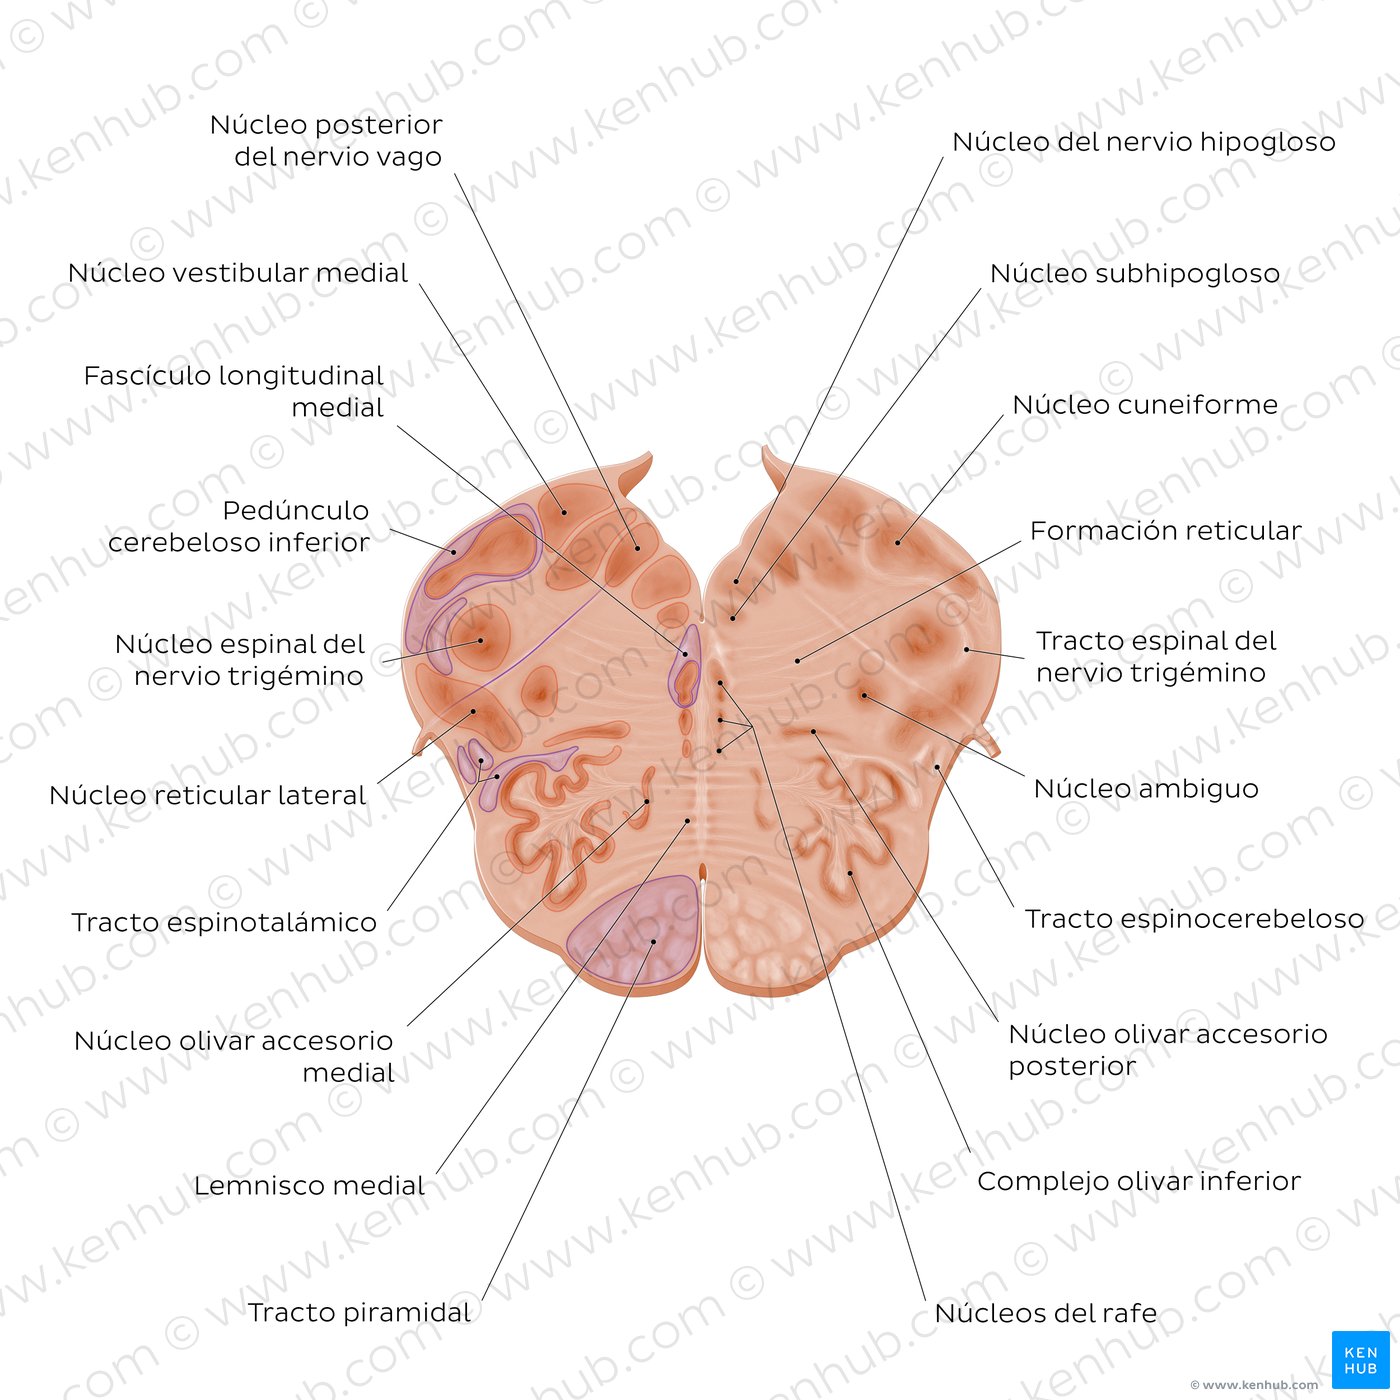 Corte transversal del bulbo raquídeo a nivel del nervio vago (diagrama)